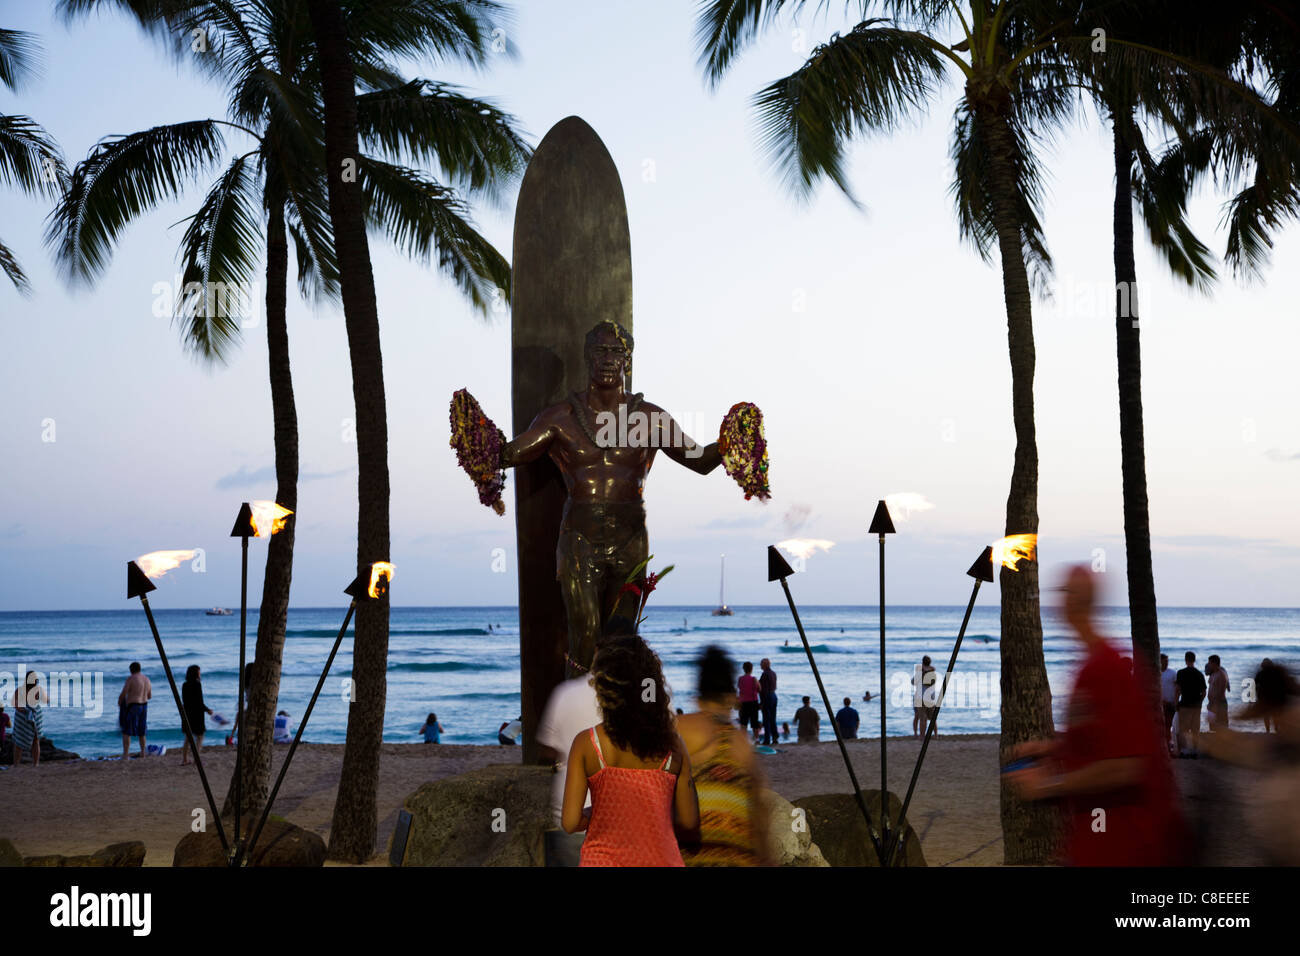 Per solo uso editoriale: crepuscolo presso la Duke Kahanamoku statua sulla spiaggia di Waikiki a Honolulu, Oahu, Hawaii. Foto Stock